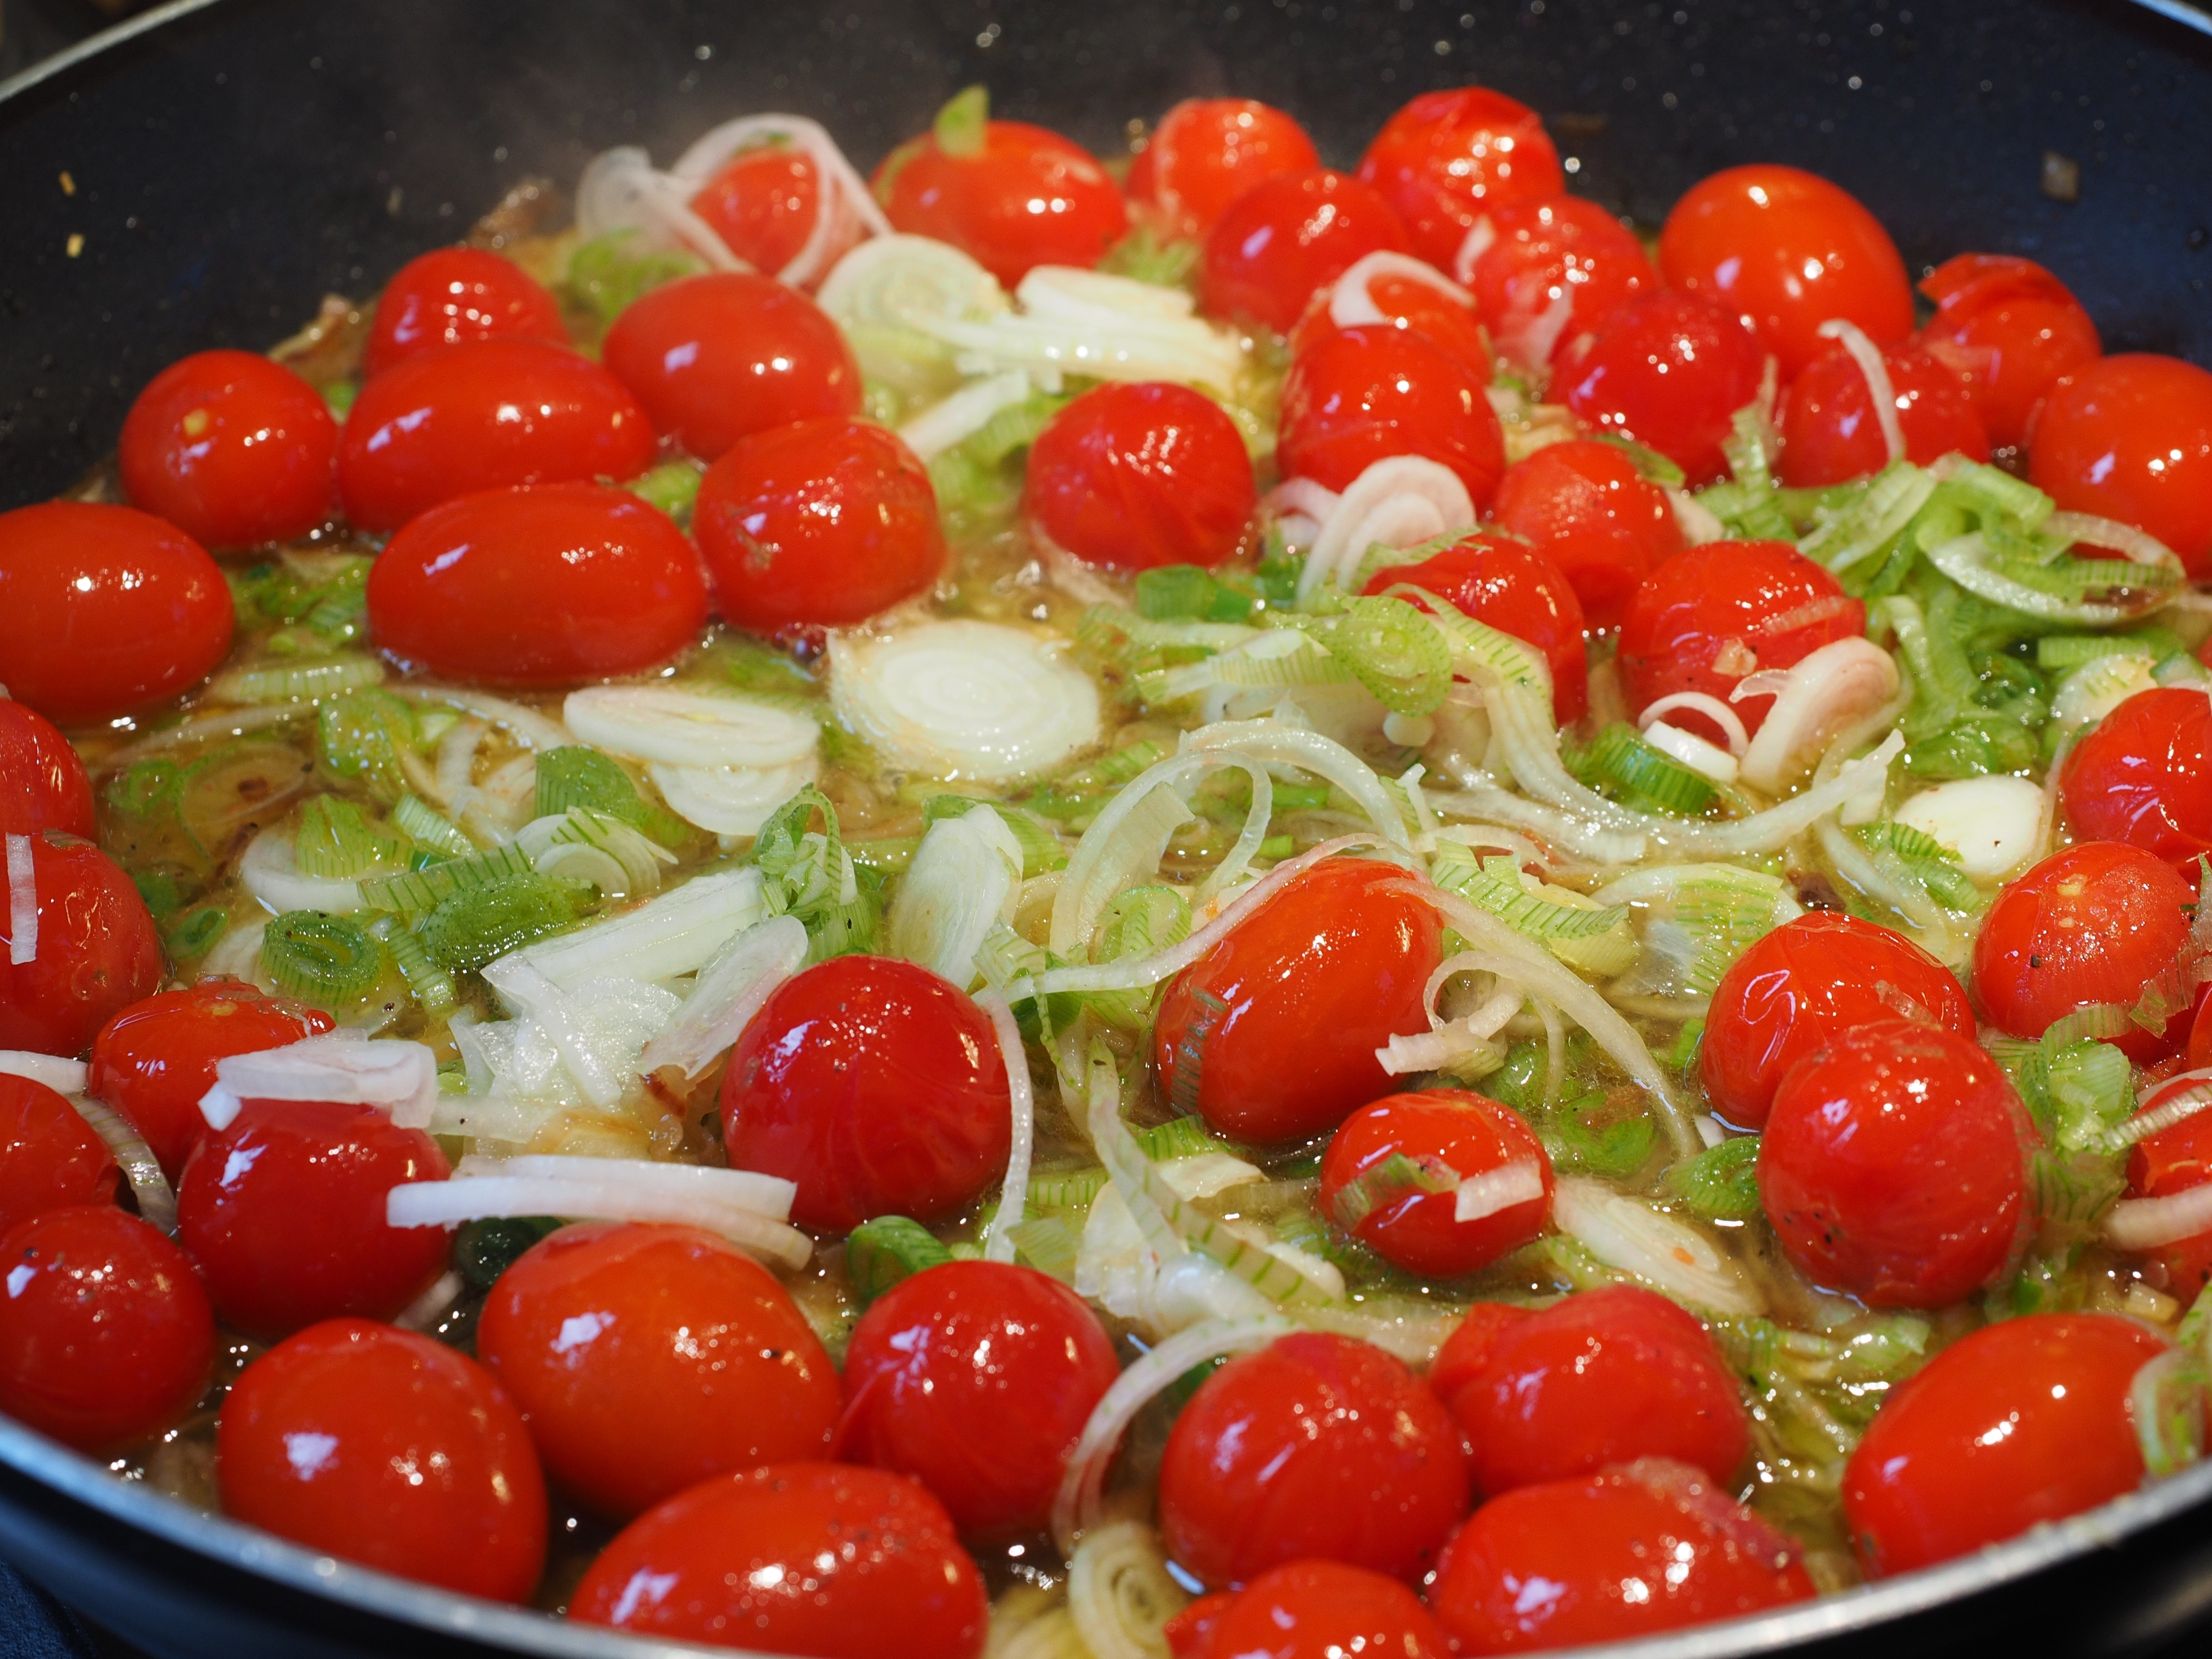 red tomato and pasta dish